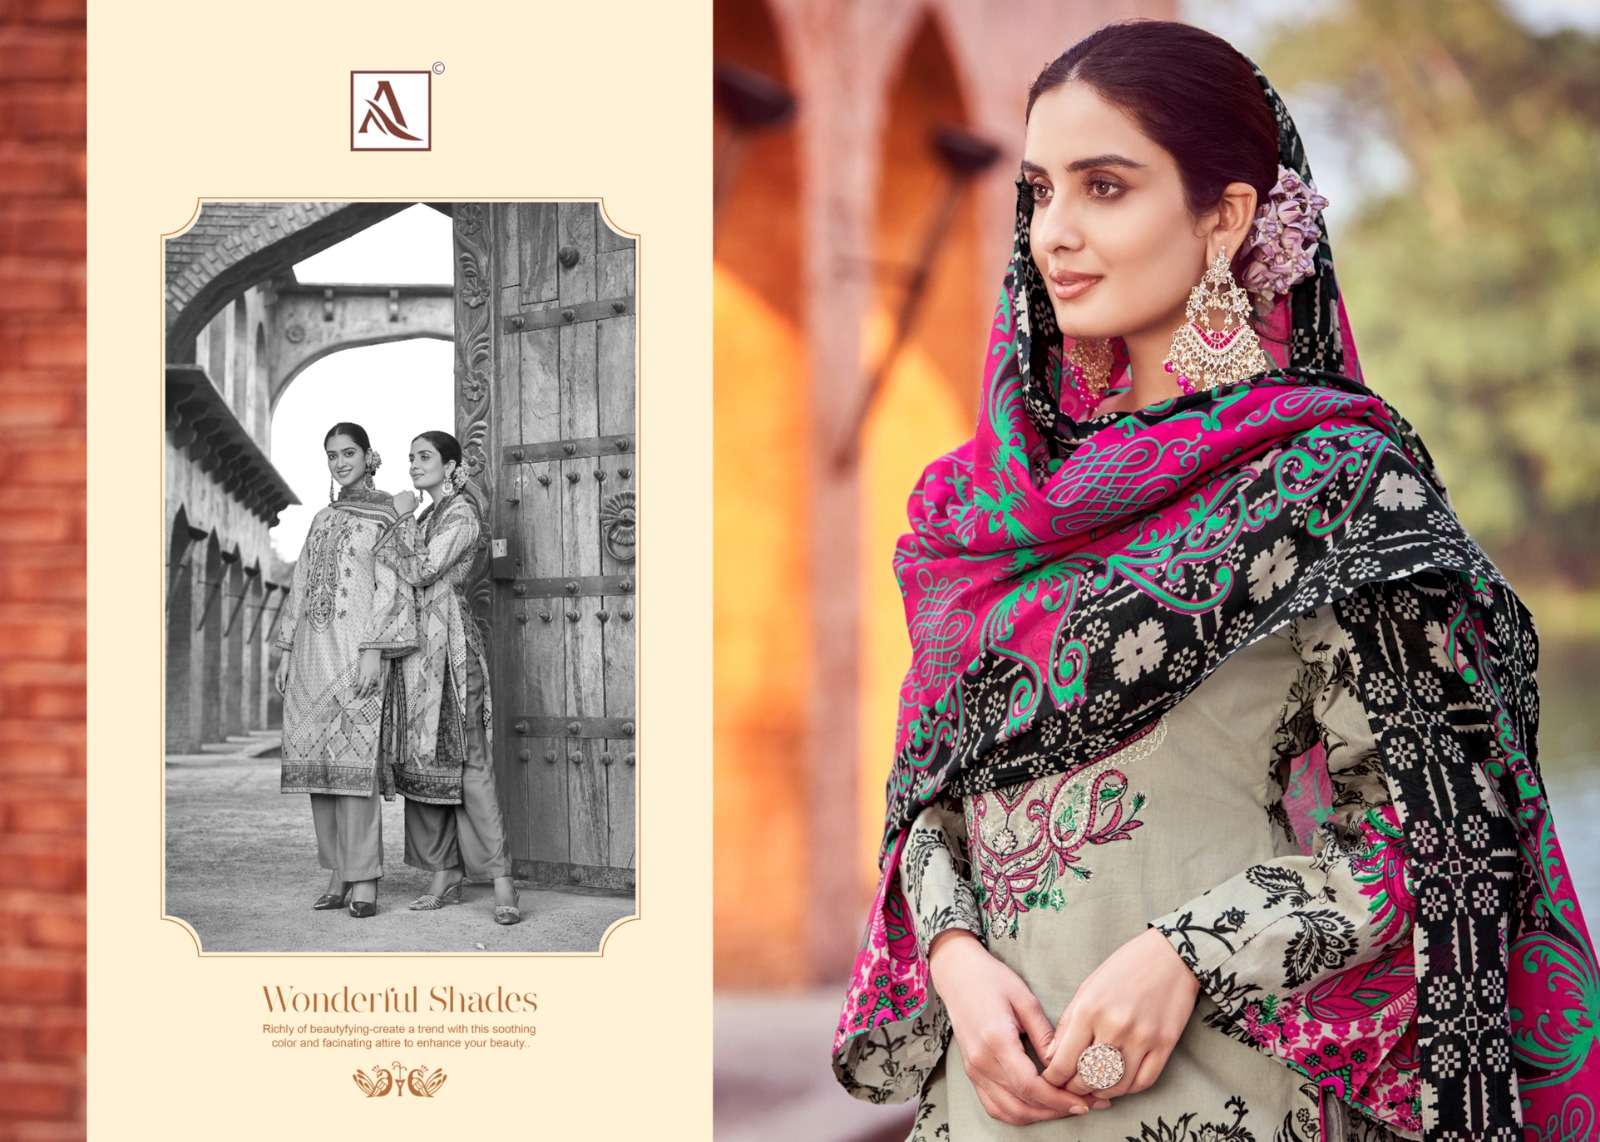 alok suit gulshan ara designer pakistani salwar kameez wholesaler surat gujarat